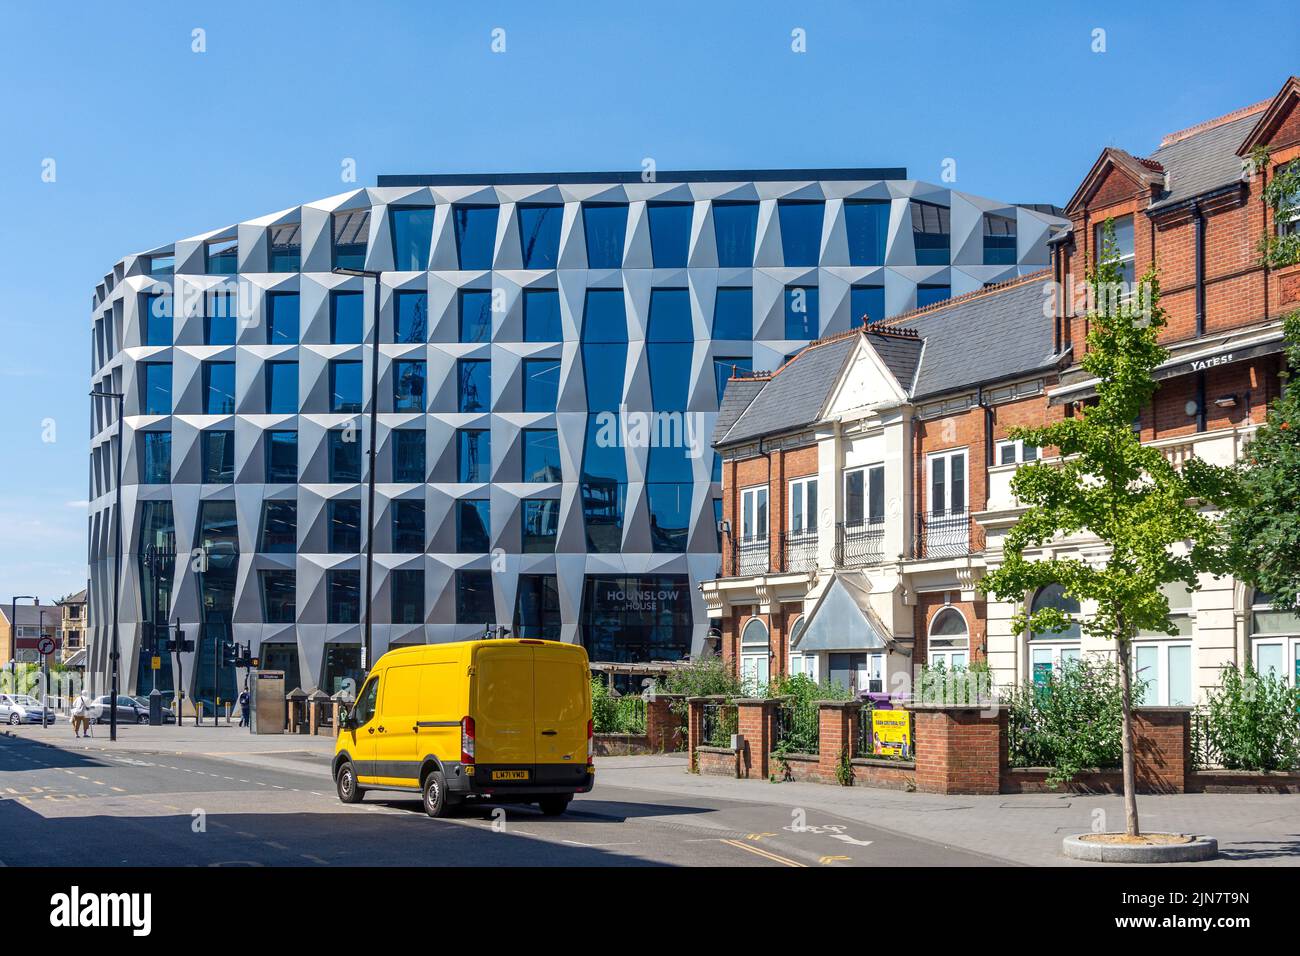 Civic Center Hounslow House, Bath Road, Hounslow, London Borough of Hounslow, Greater London, England, Regno Unito Foto Stock